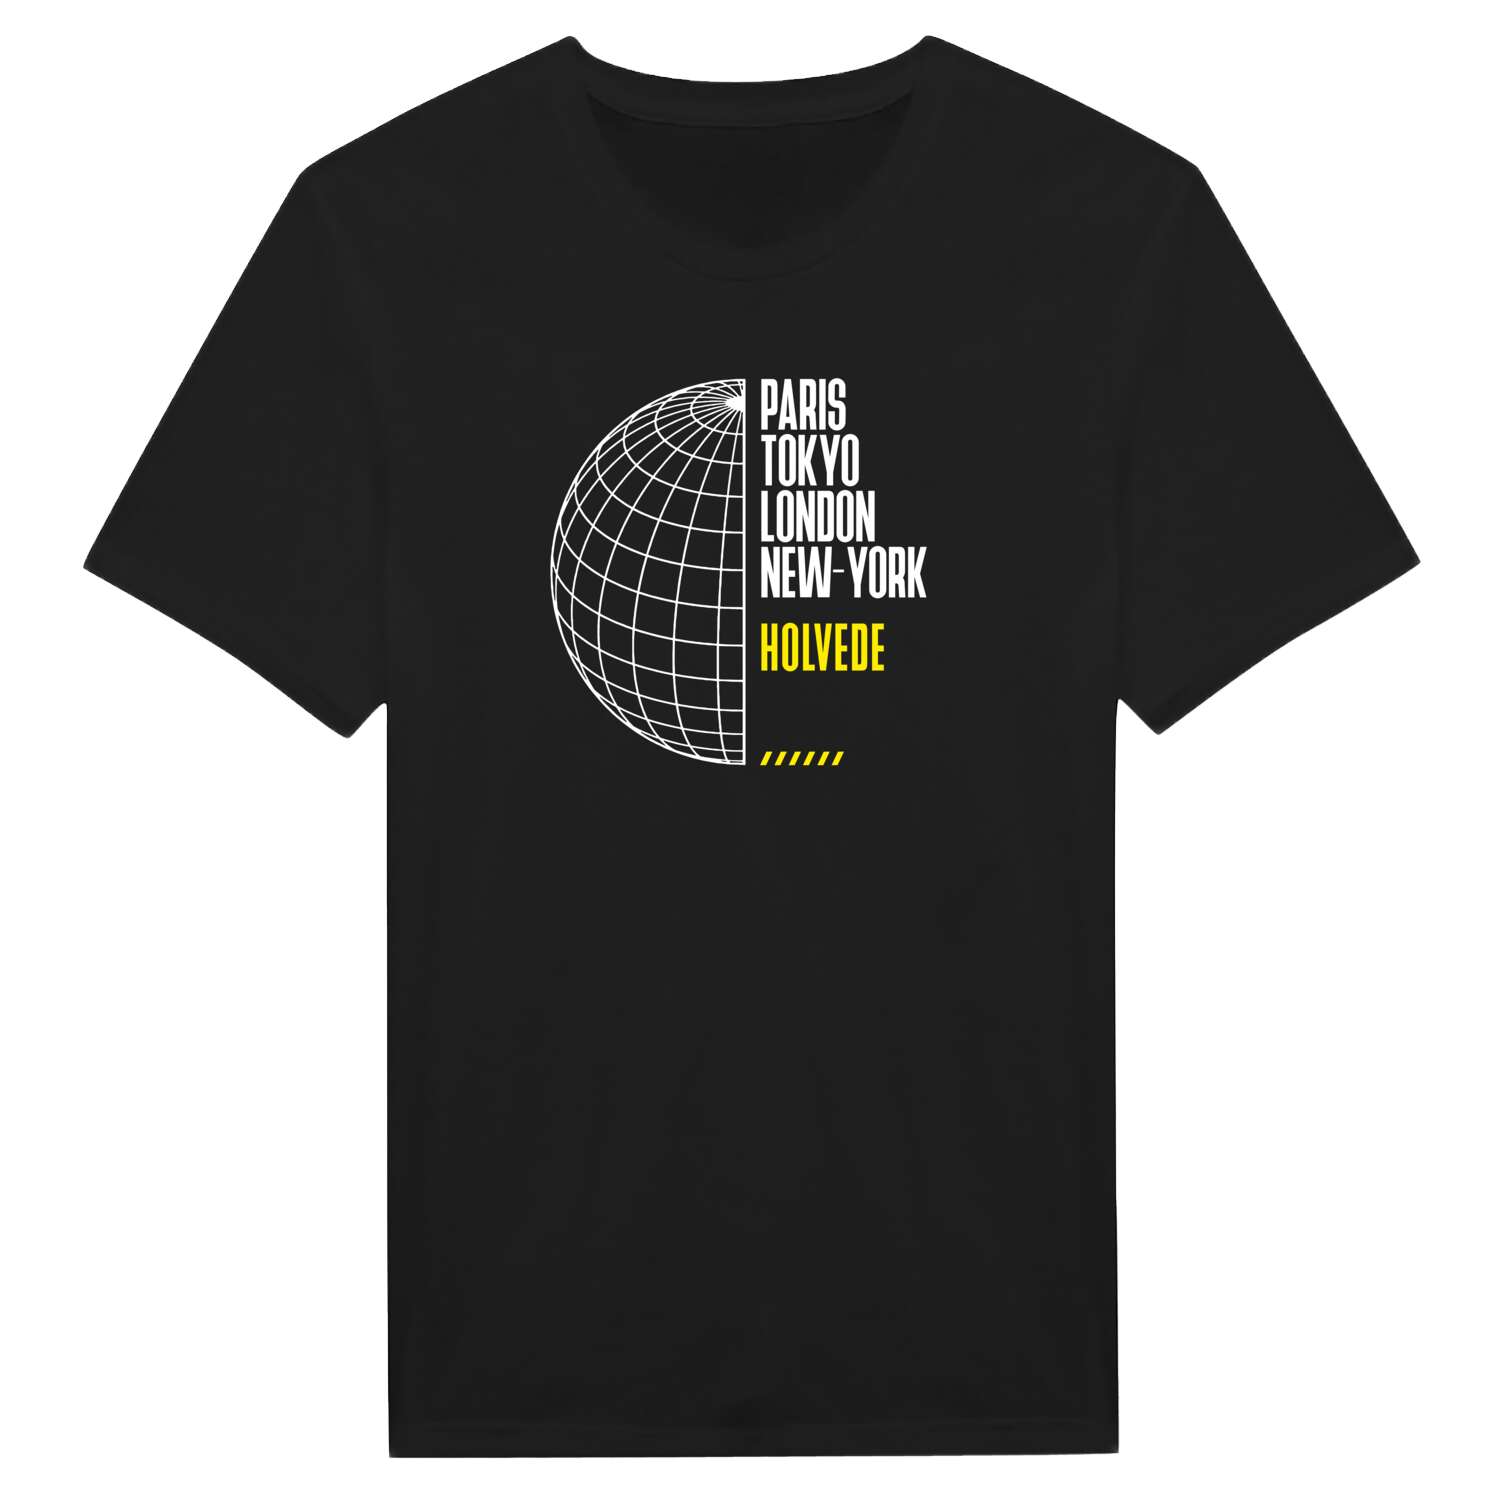 Holvede T-Shirt »Paris Tokyo London«